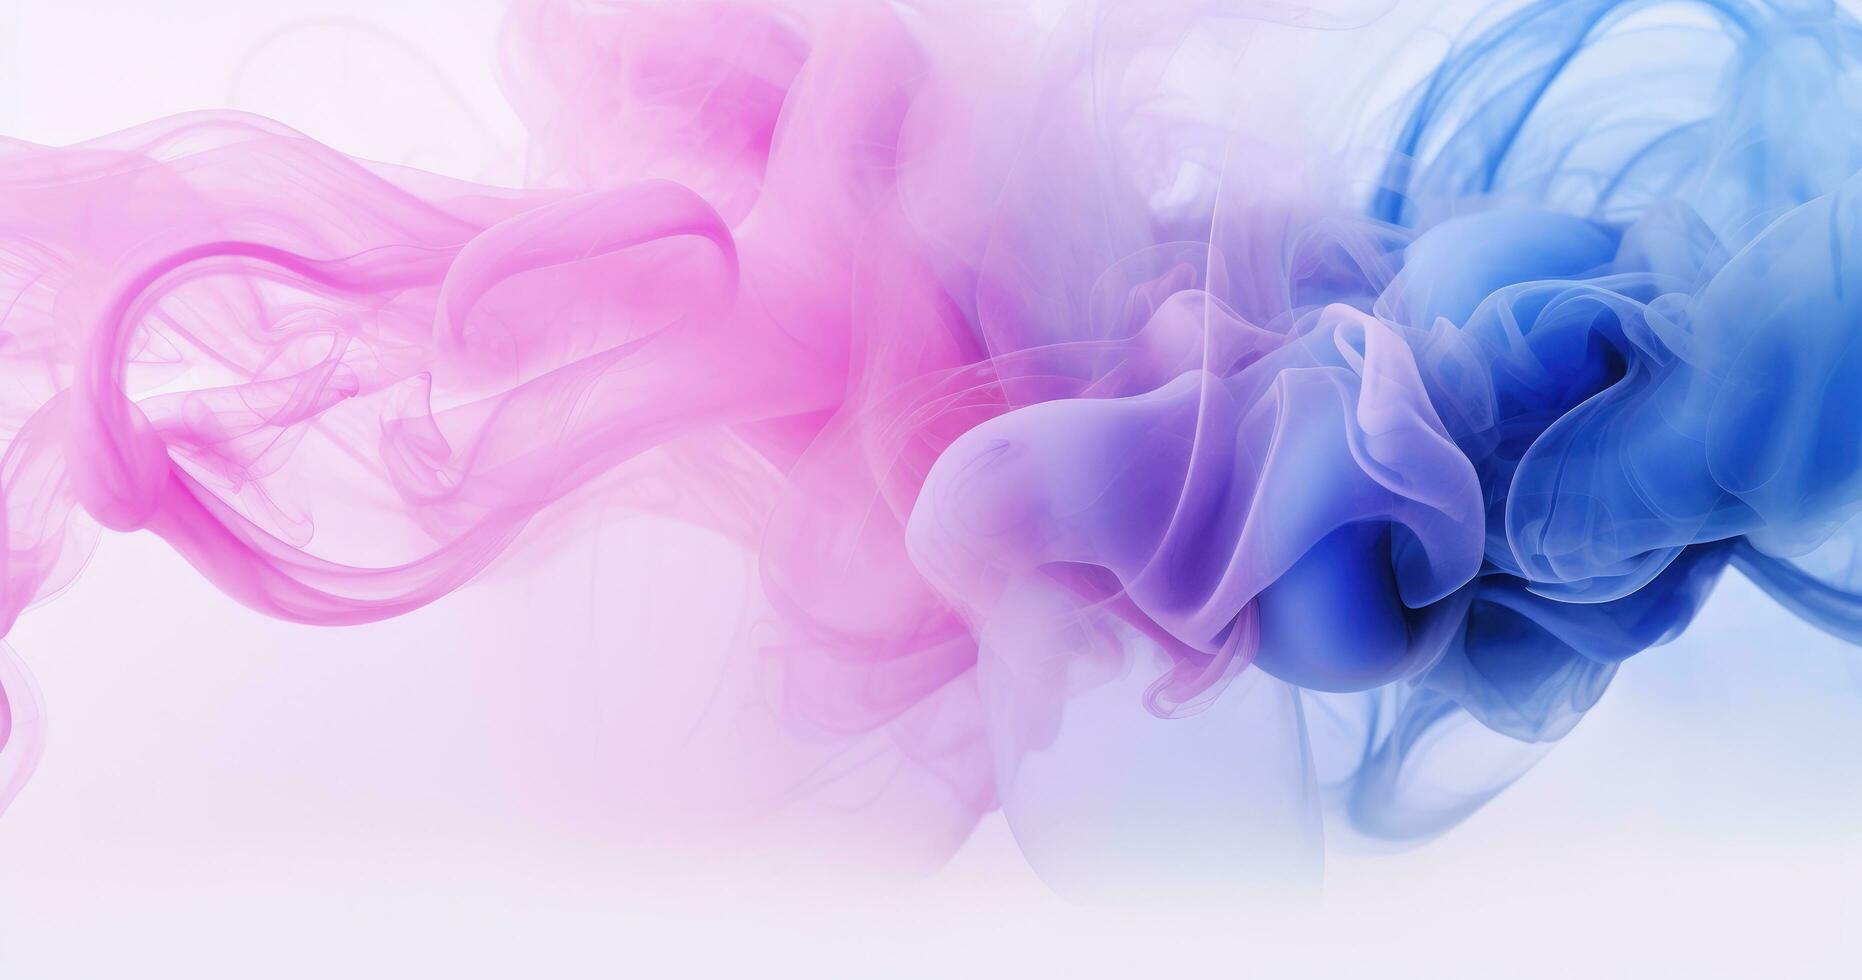 AI generated blue purple, pink and white powdered smoke isolated background photo